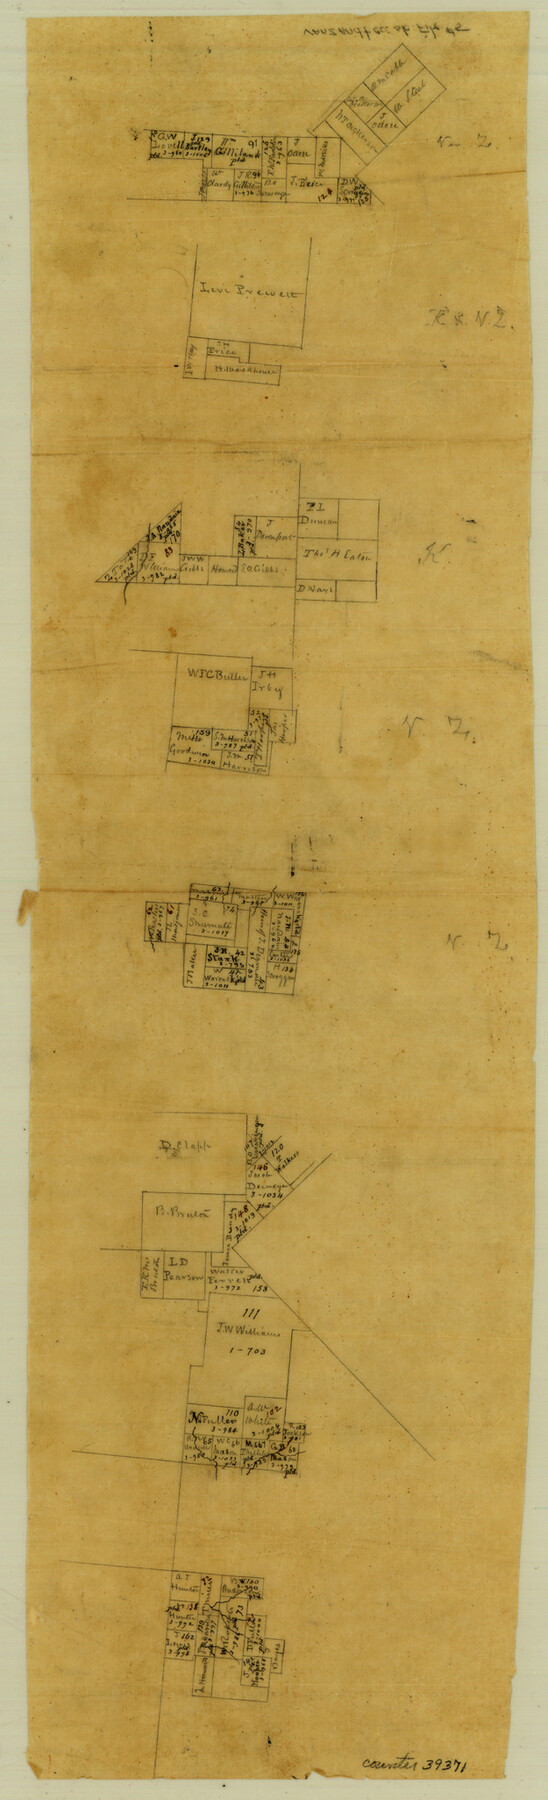 39371, Van Zandt County Sketch File 5, General Map Collection